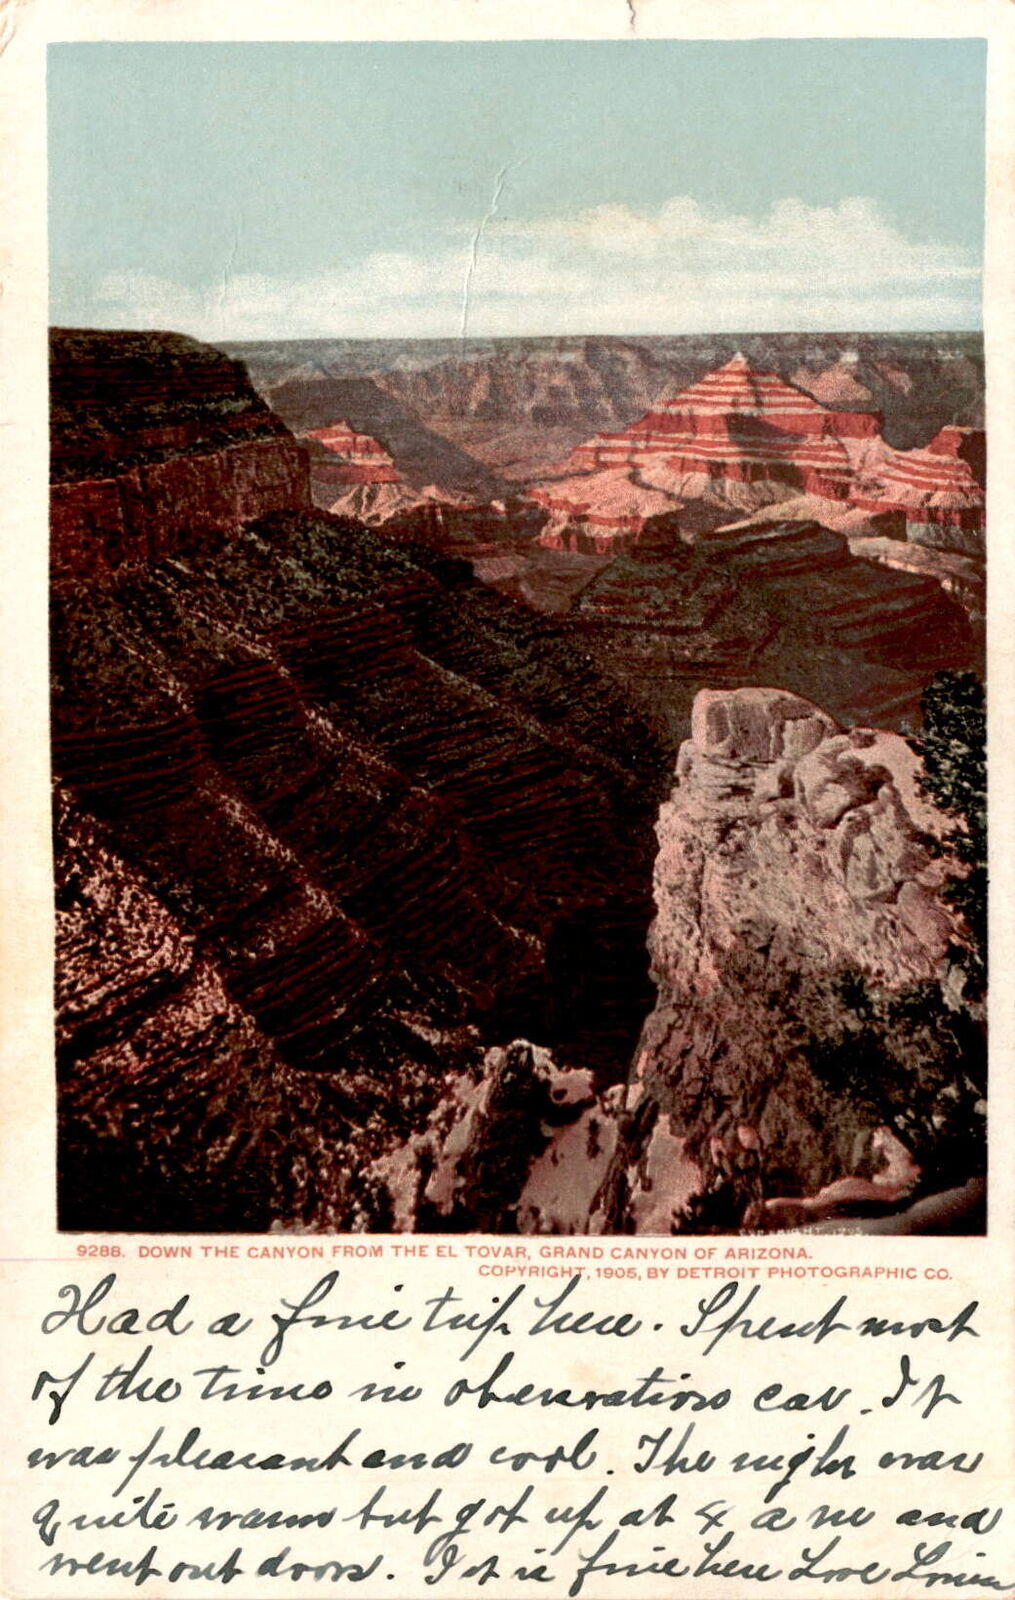 Grand Canyon, Arizona, El Tovar, observation car, pleasant weather, Postcard